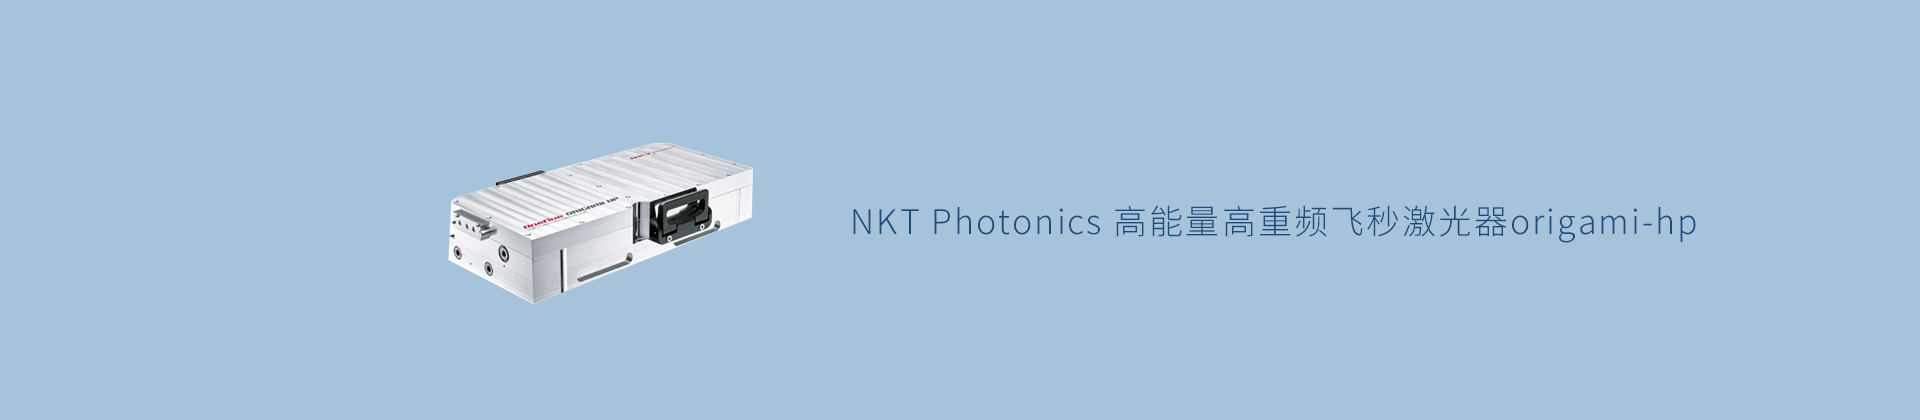 NKT Photonics 高能量高重频飞秒激光器origami-hp